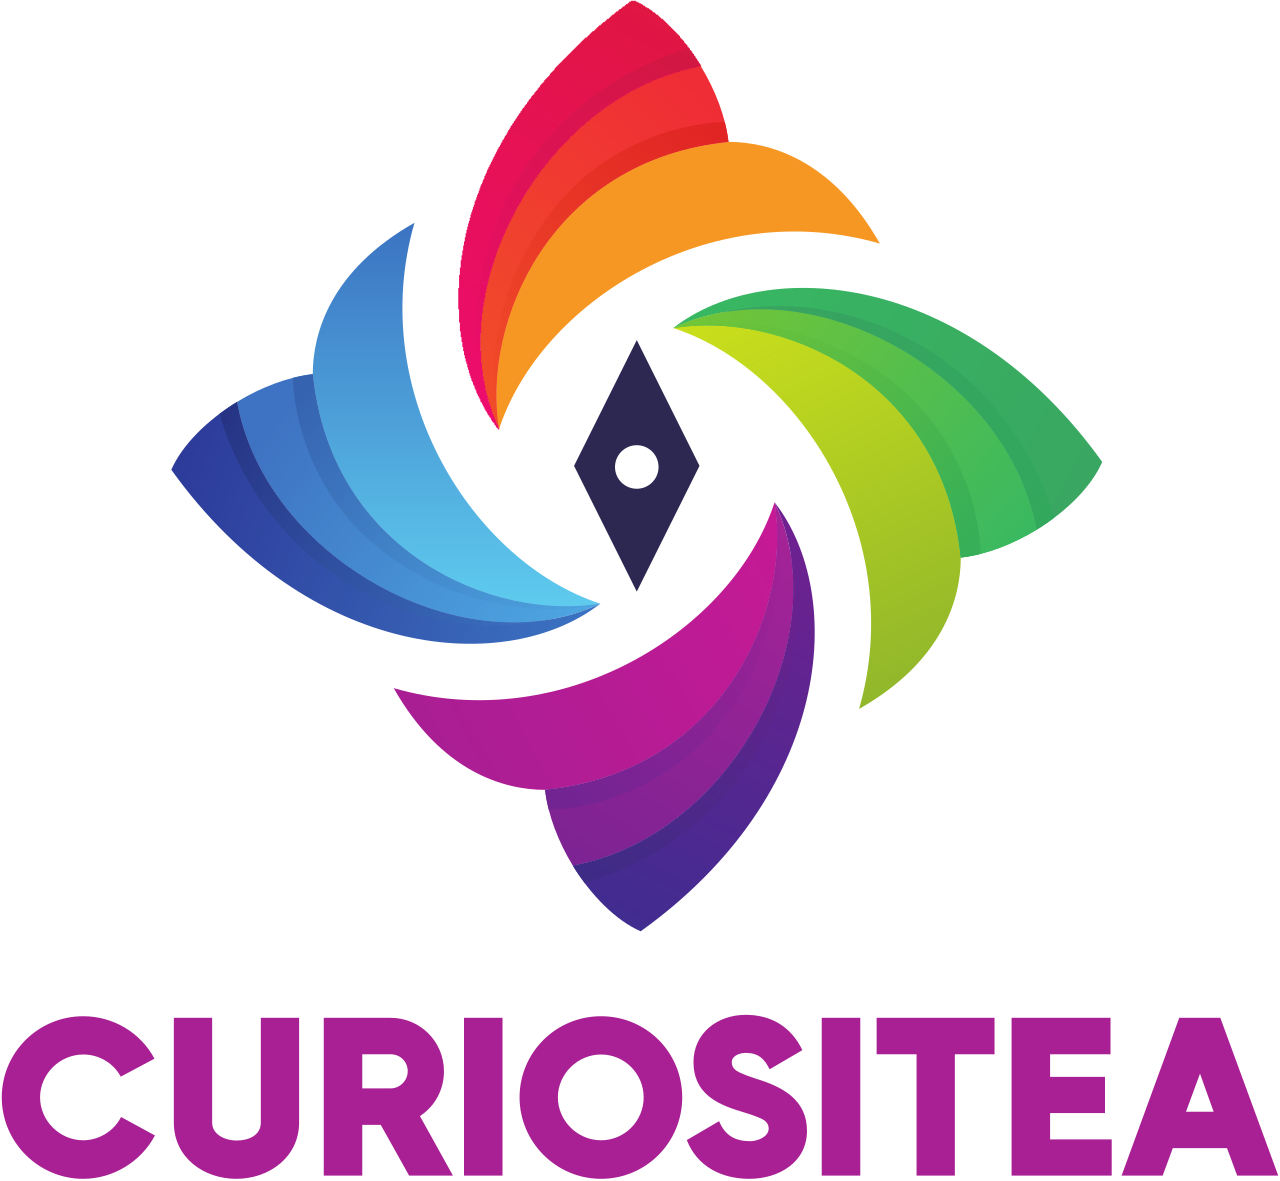 CURIOSItEA's logo